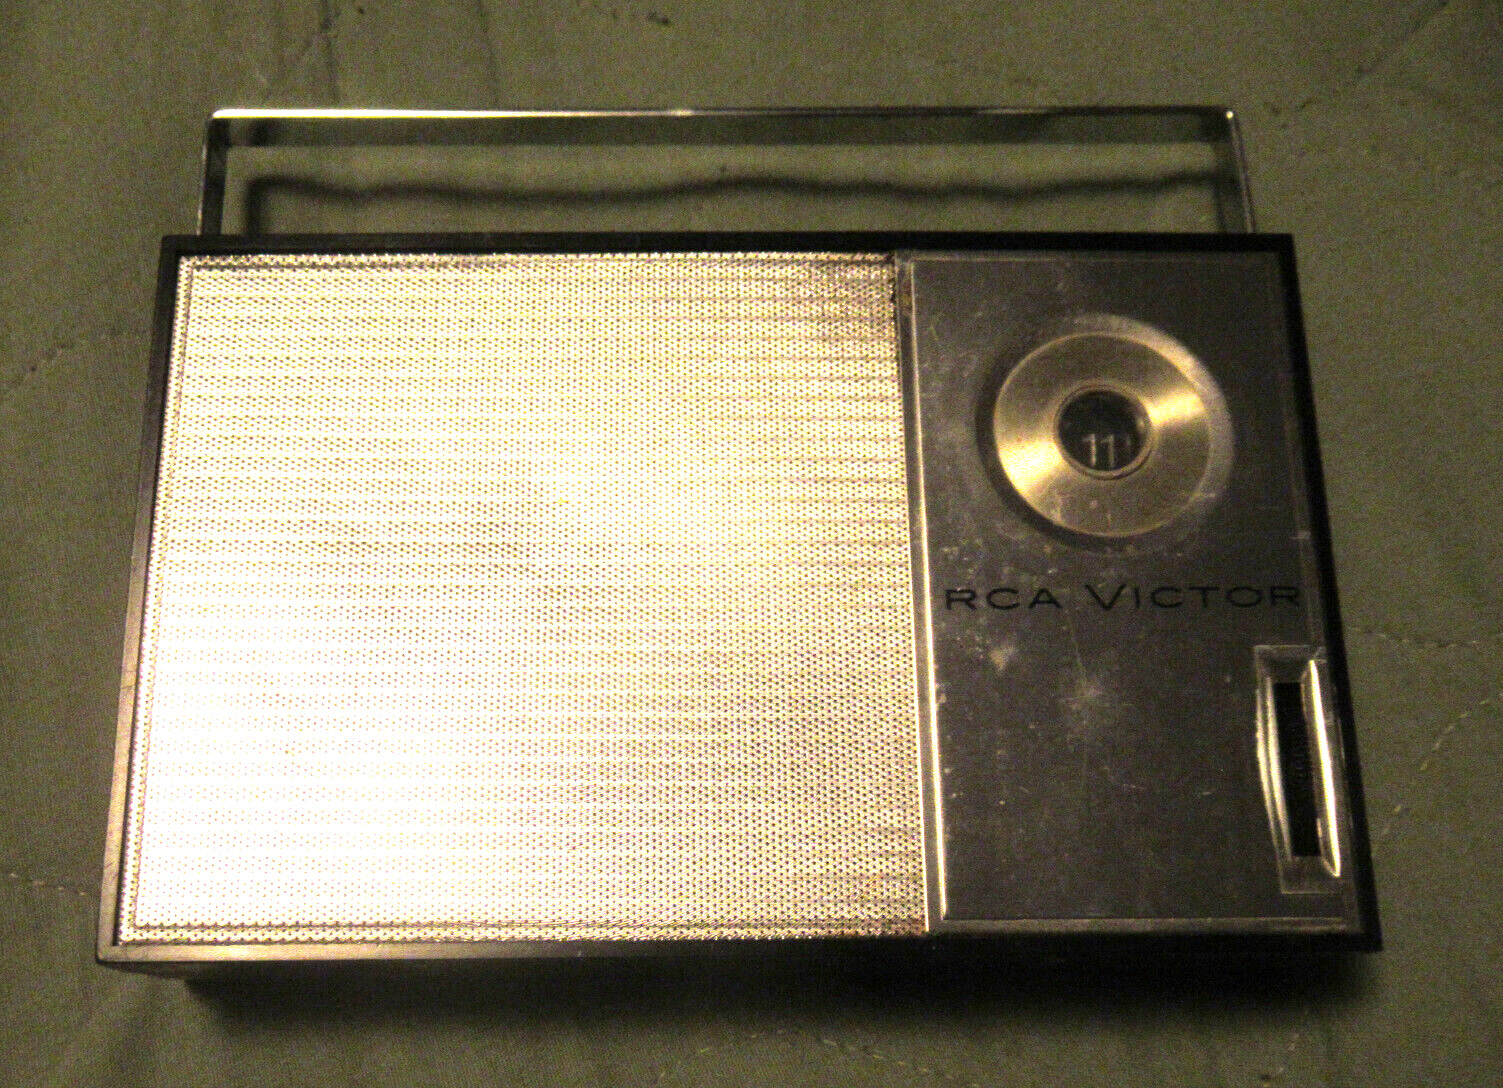 RCA VICTOR Model 4-RG-21 Vintage Transistor Radio - Genuine Leather Case